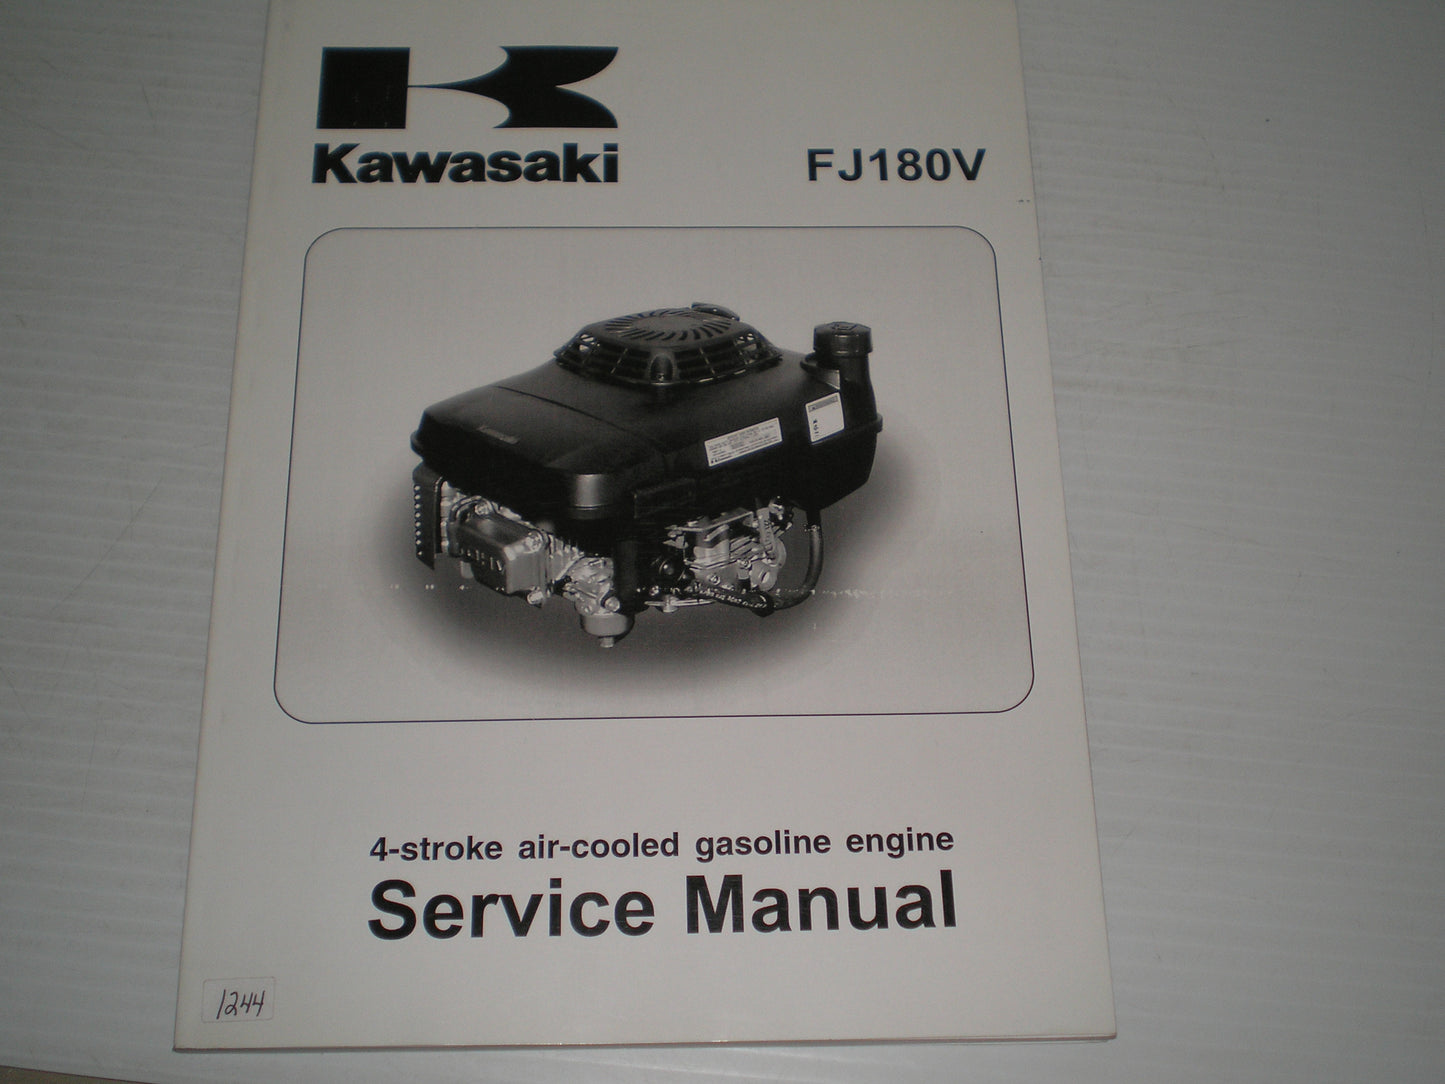 KAWASAKI FJ180V  FJ180 V  2004  4-stroke air-cooled gasoline engine  Service Manual  99924-2063-02  #1244